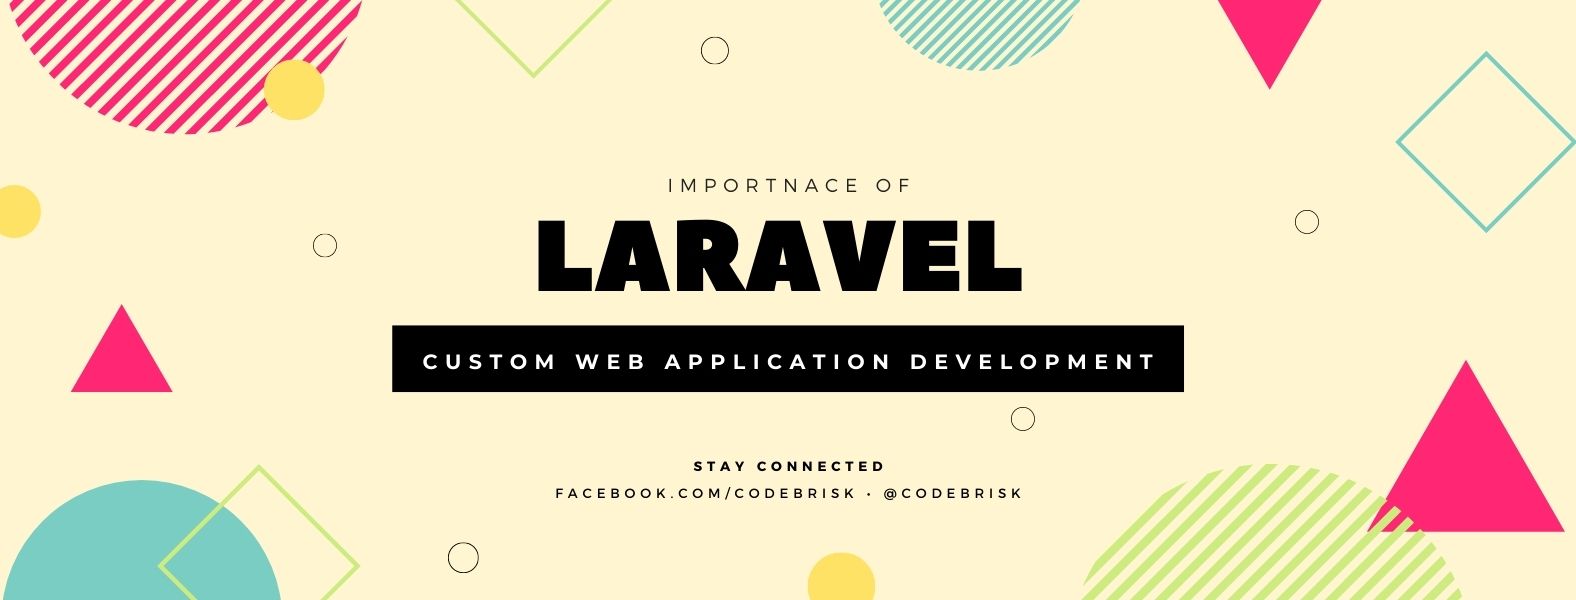 Importance of Laravel Custom Web Application Development